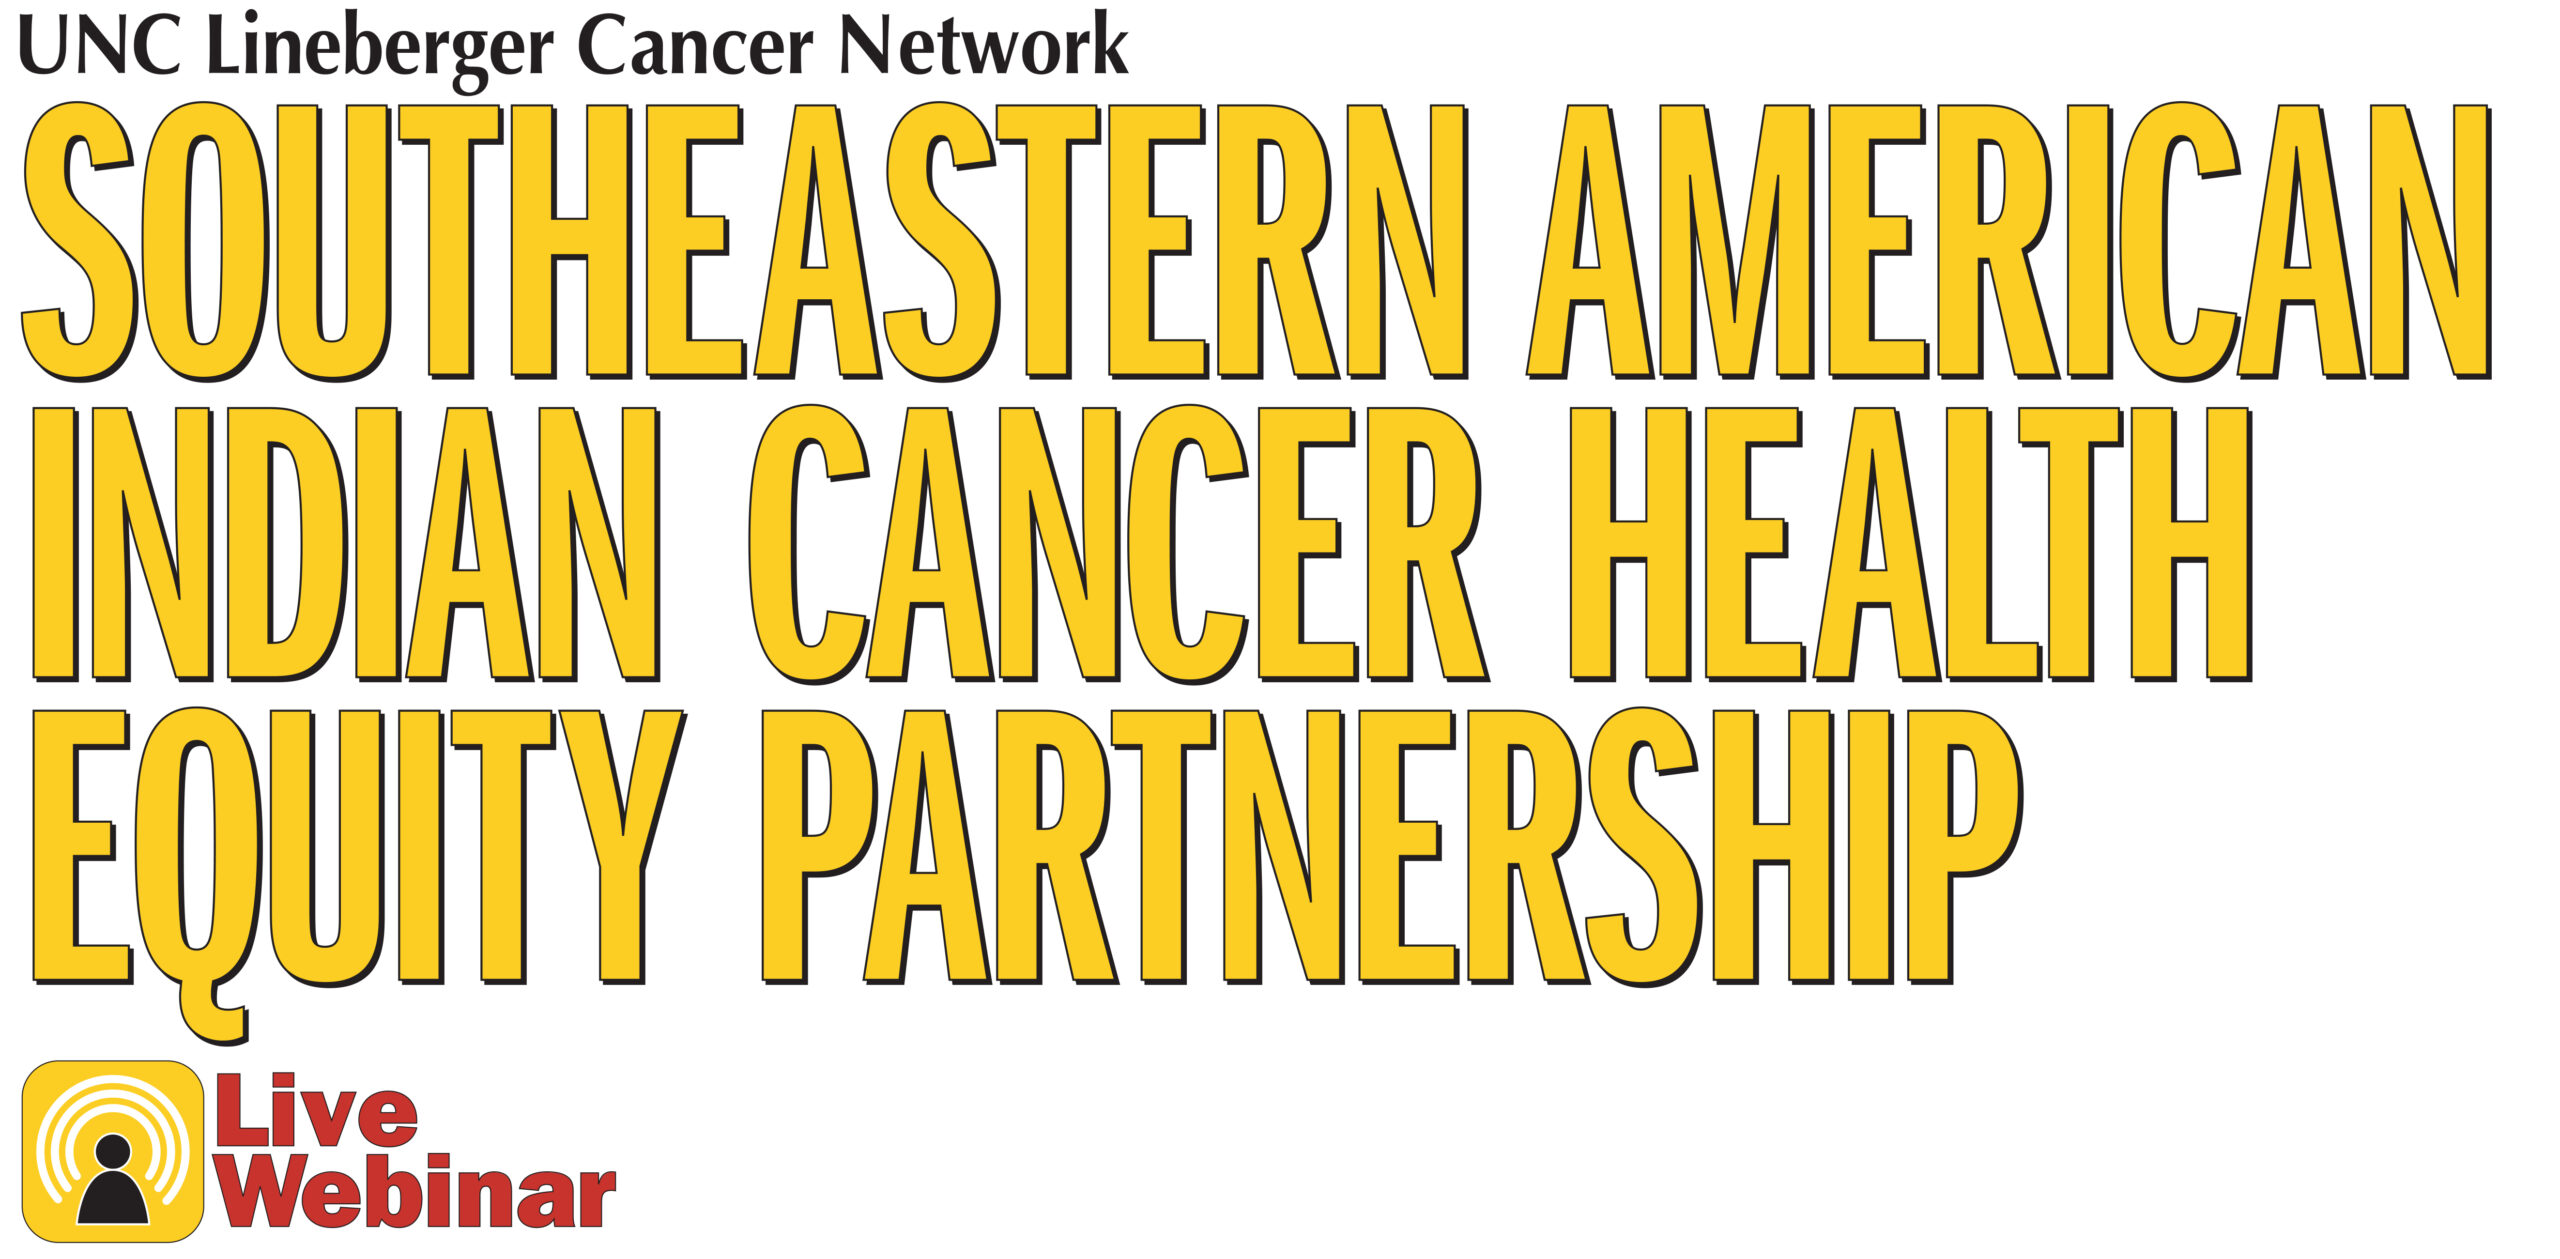 A UNCLCN Southeastern American Indian Cancer Health Equity Partnership Webinar